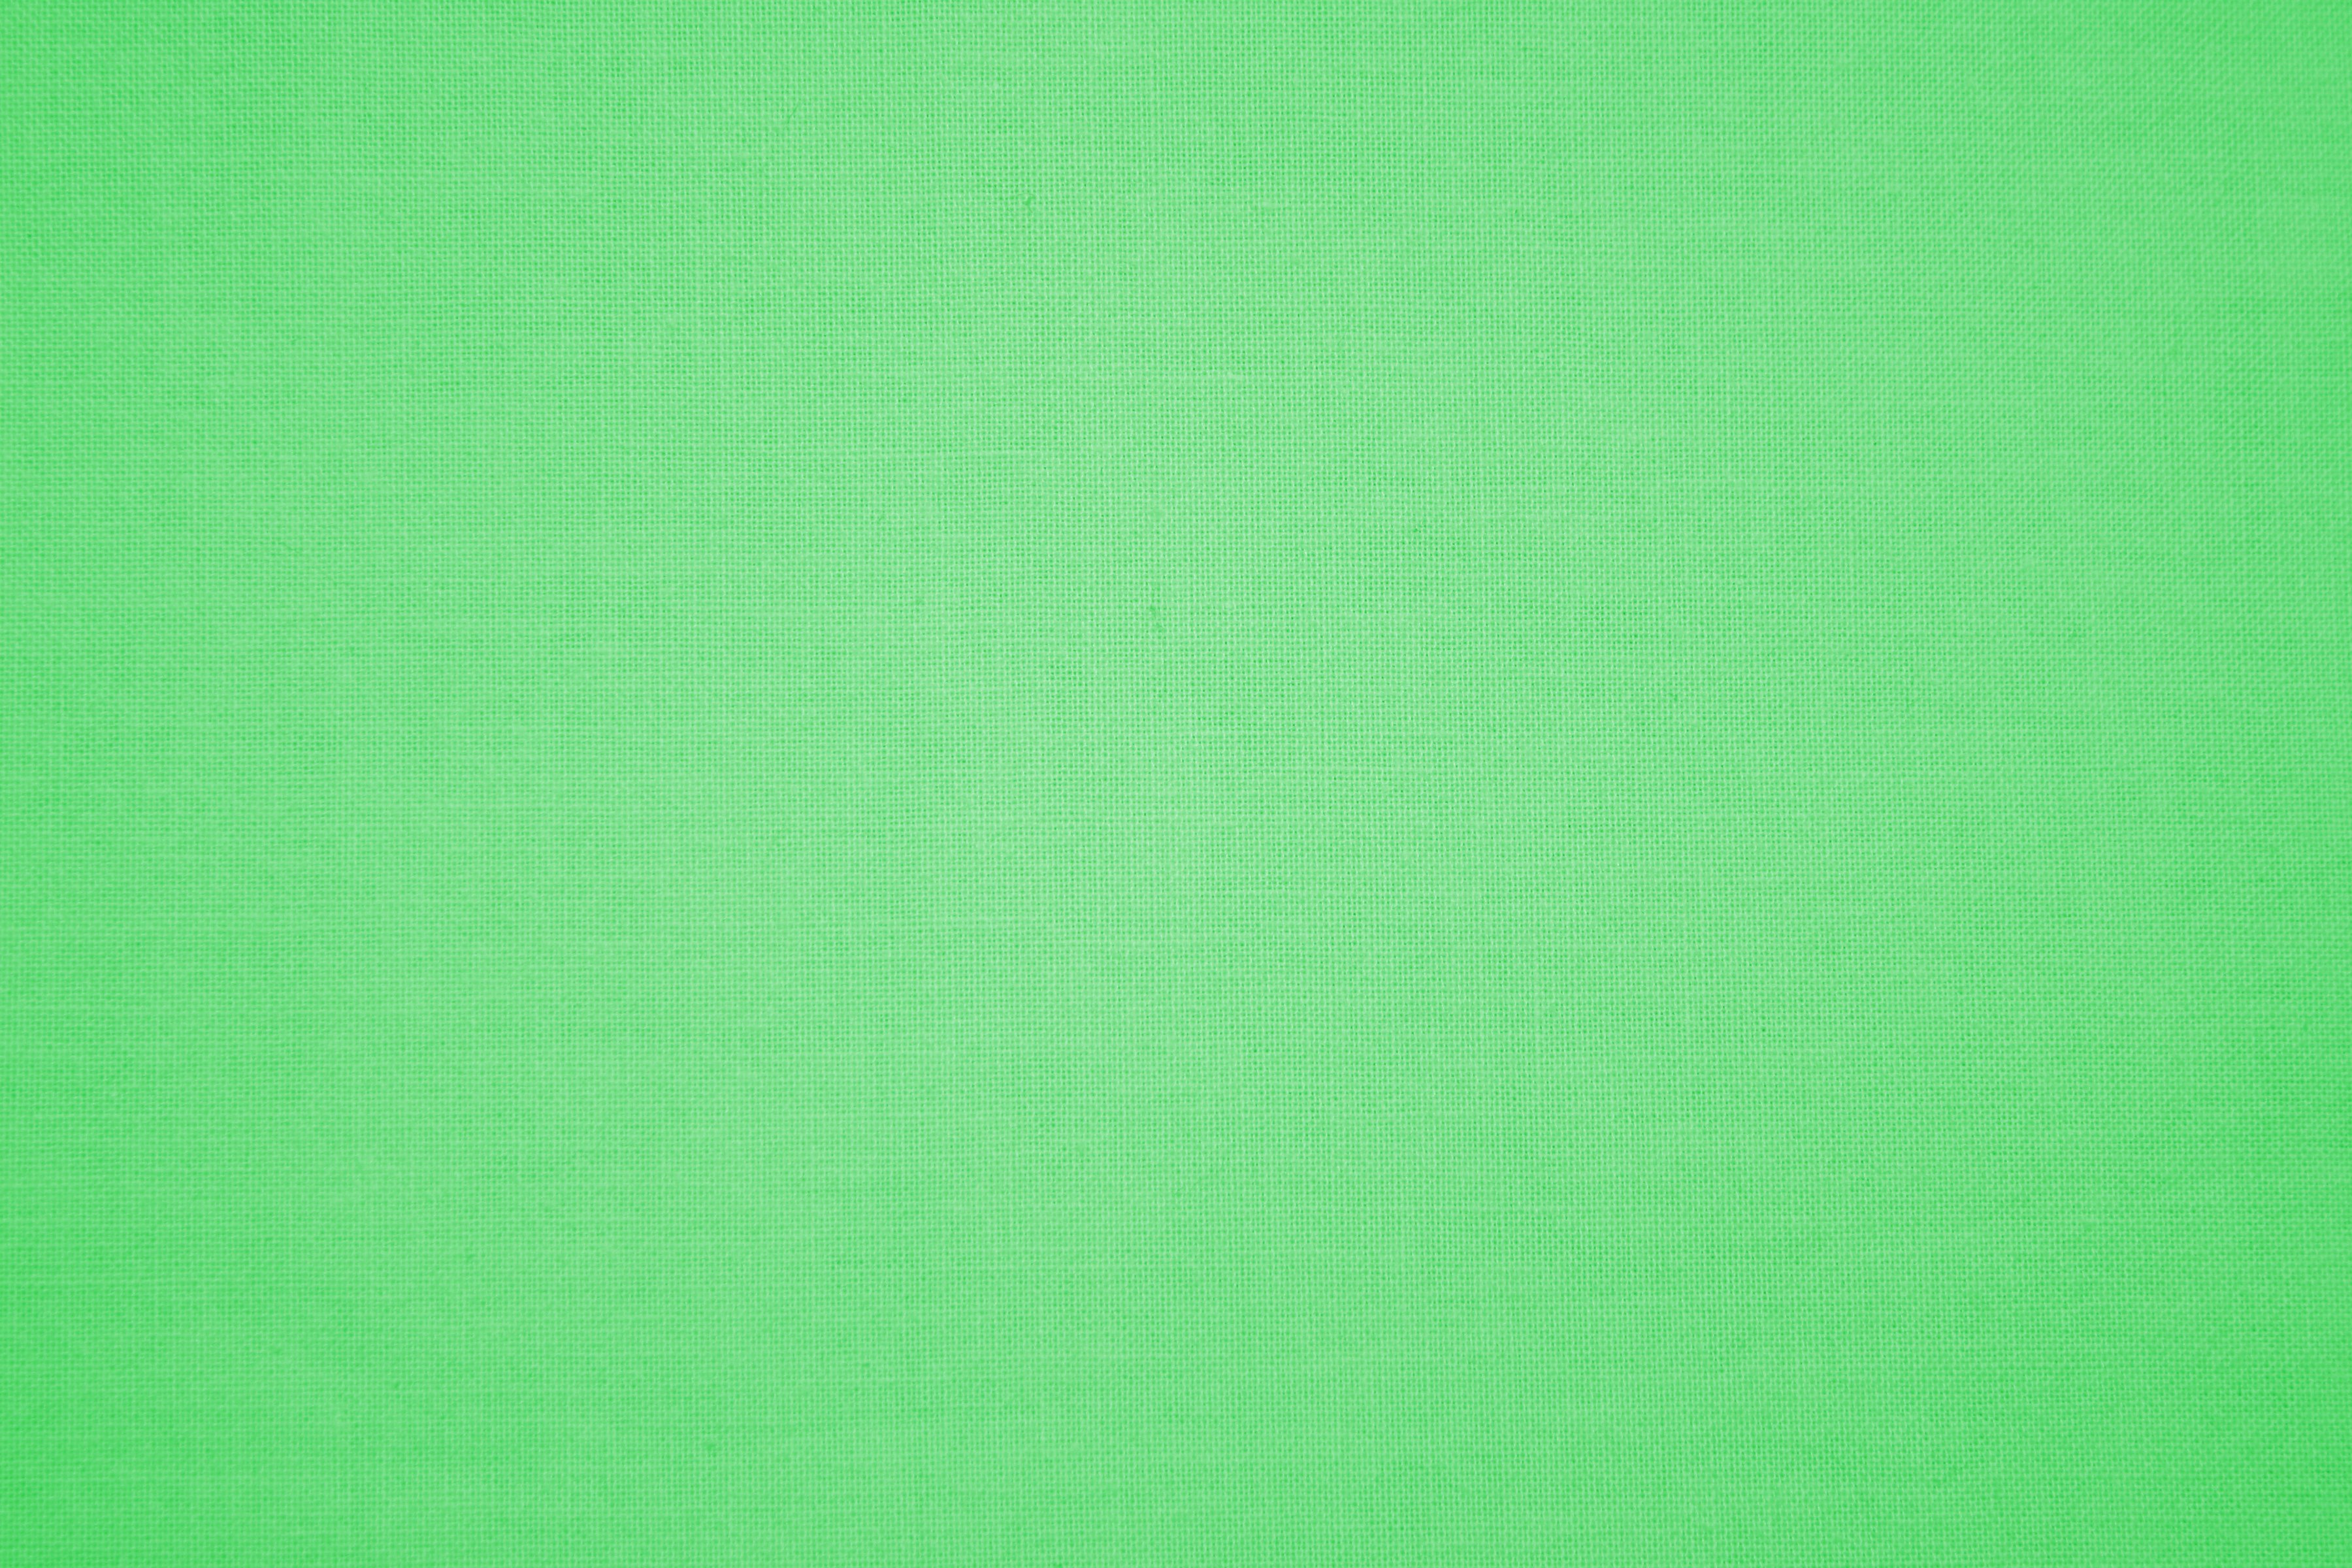 Light Green Canvas Fabric Texture Picture | Free Photograph | Photos Public  Domain